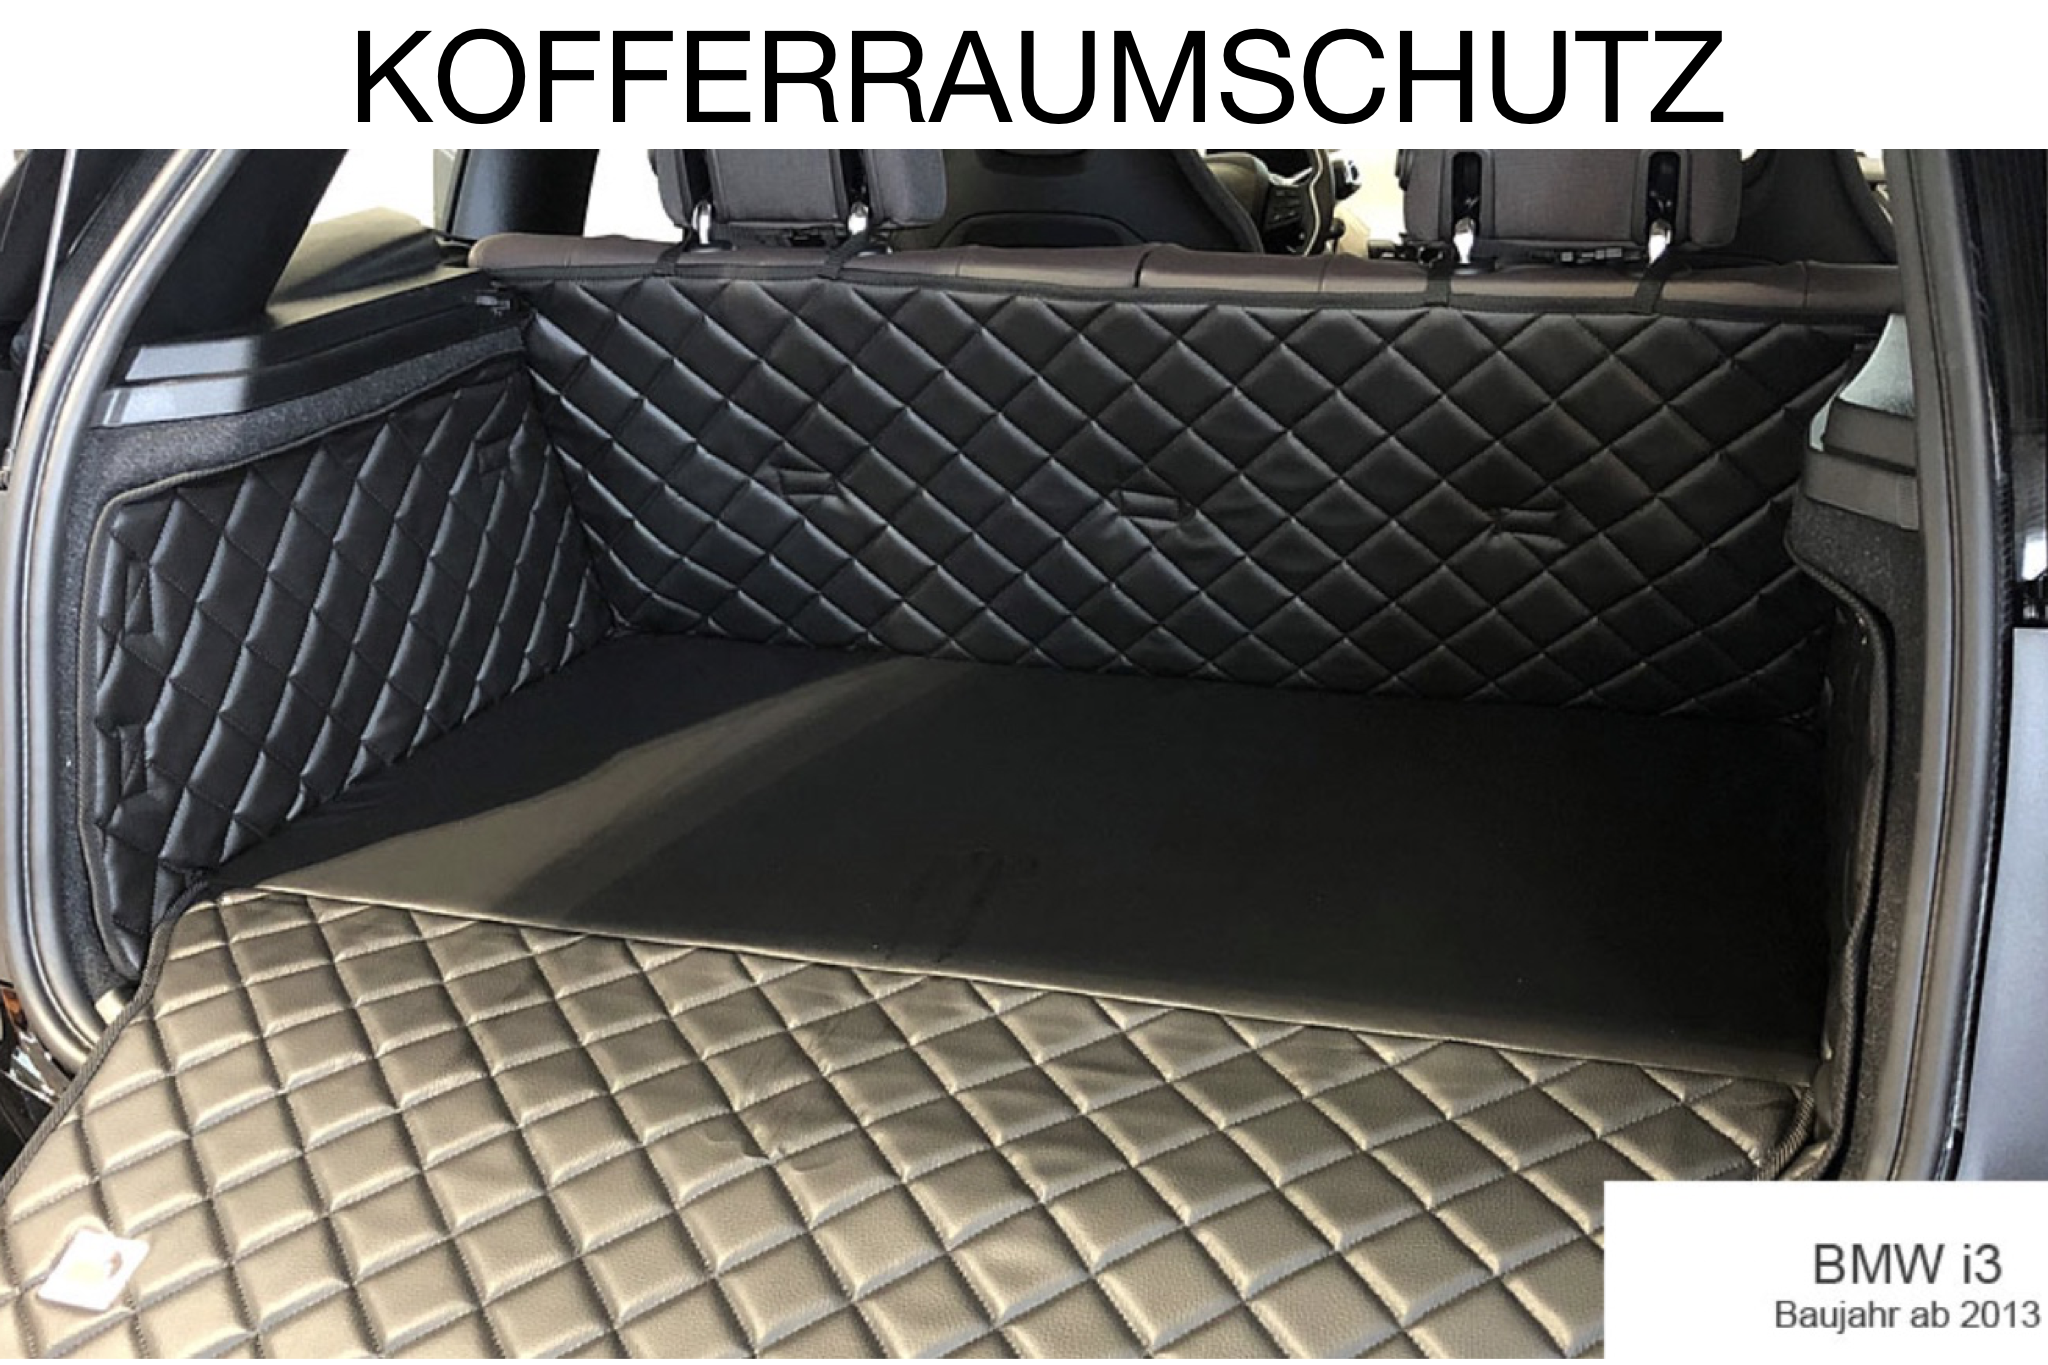 TIERVITAL NATURPRODUKTE - BMW Hunde Auto Kofferraumbett